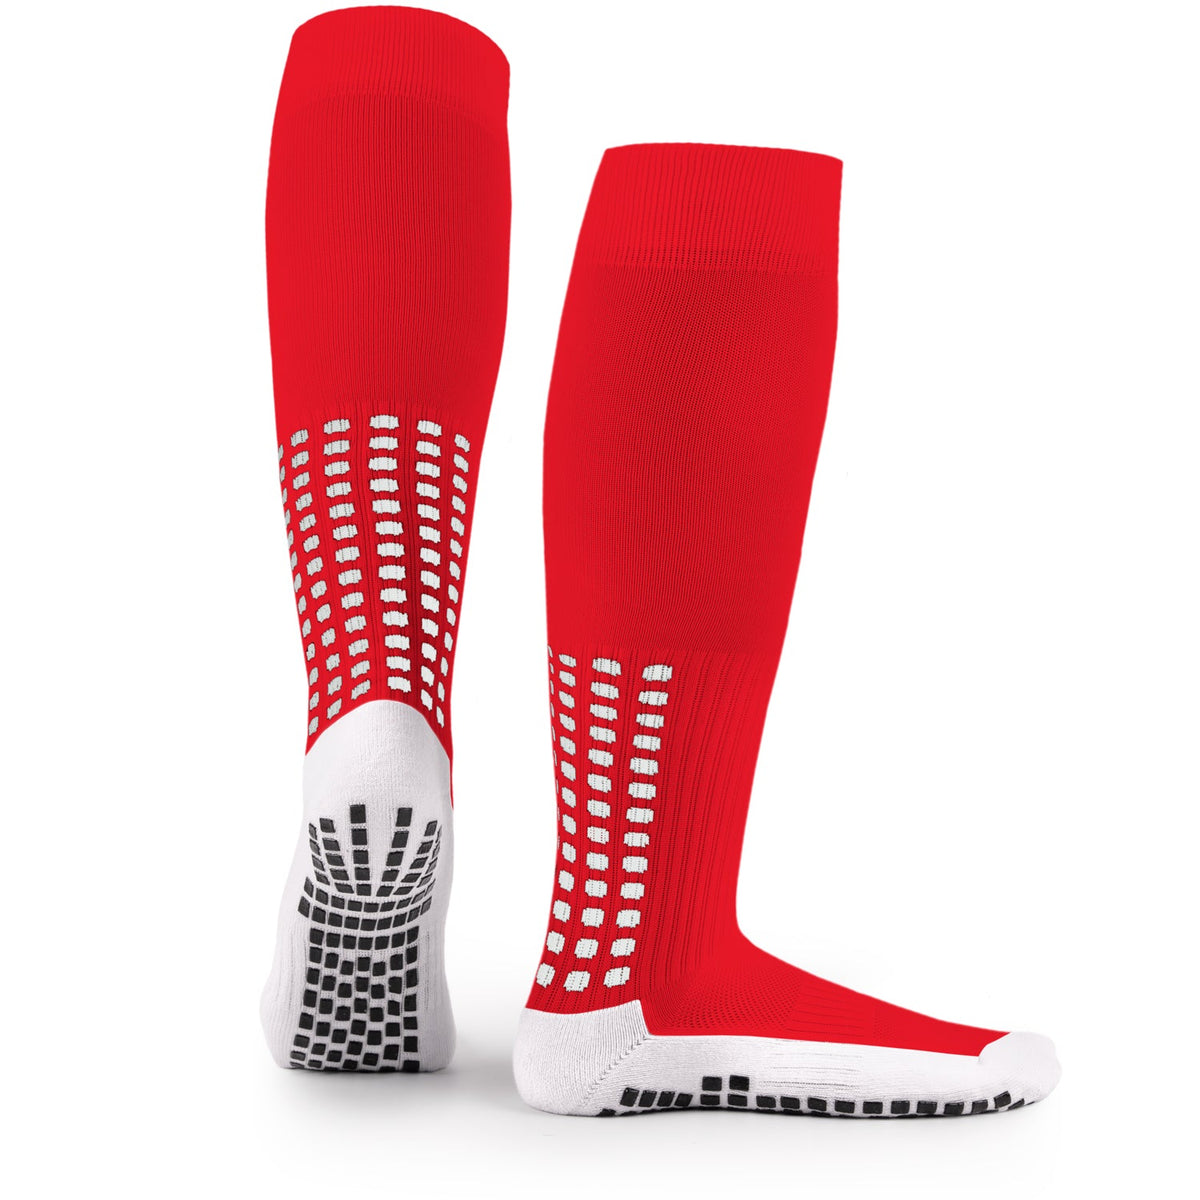 Lux Anti Slip Soccer Socks,Non Slip Football/Basketball/Hockey Sports Grip Pads Socks